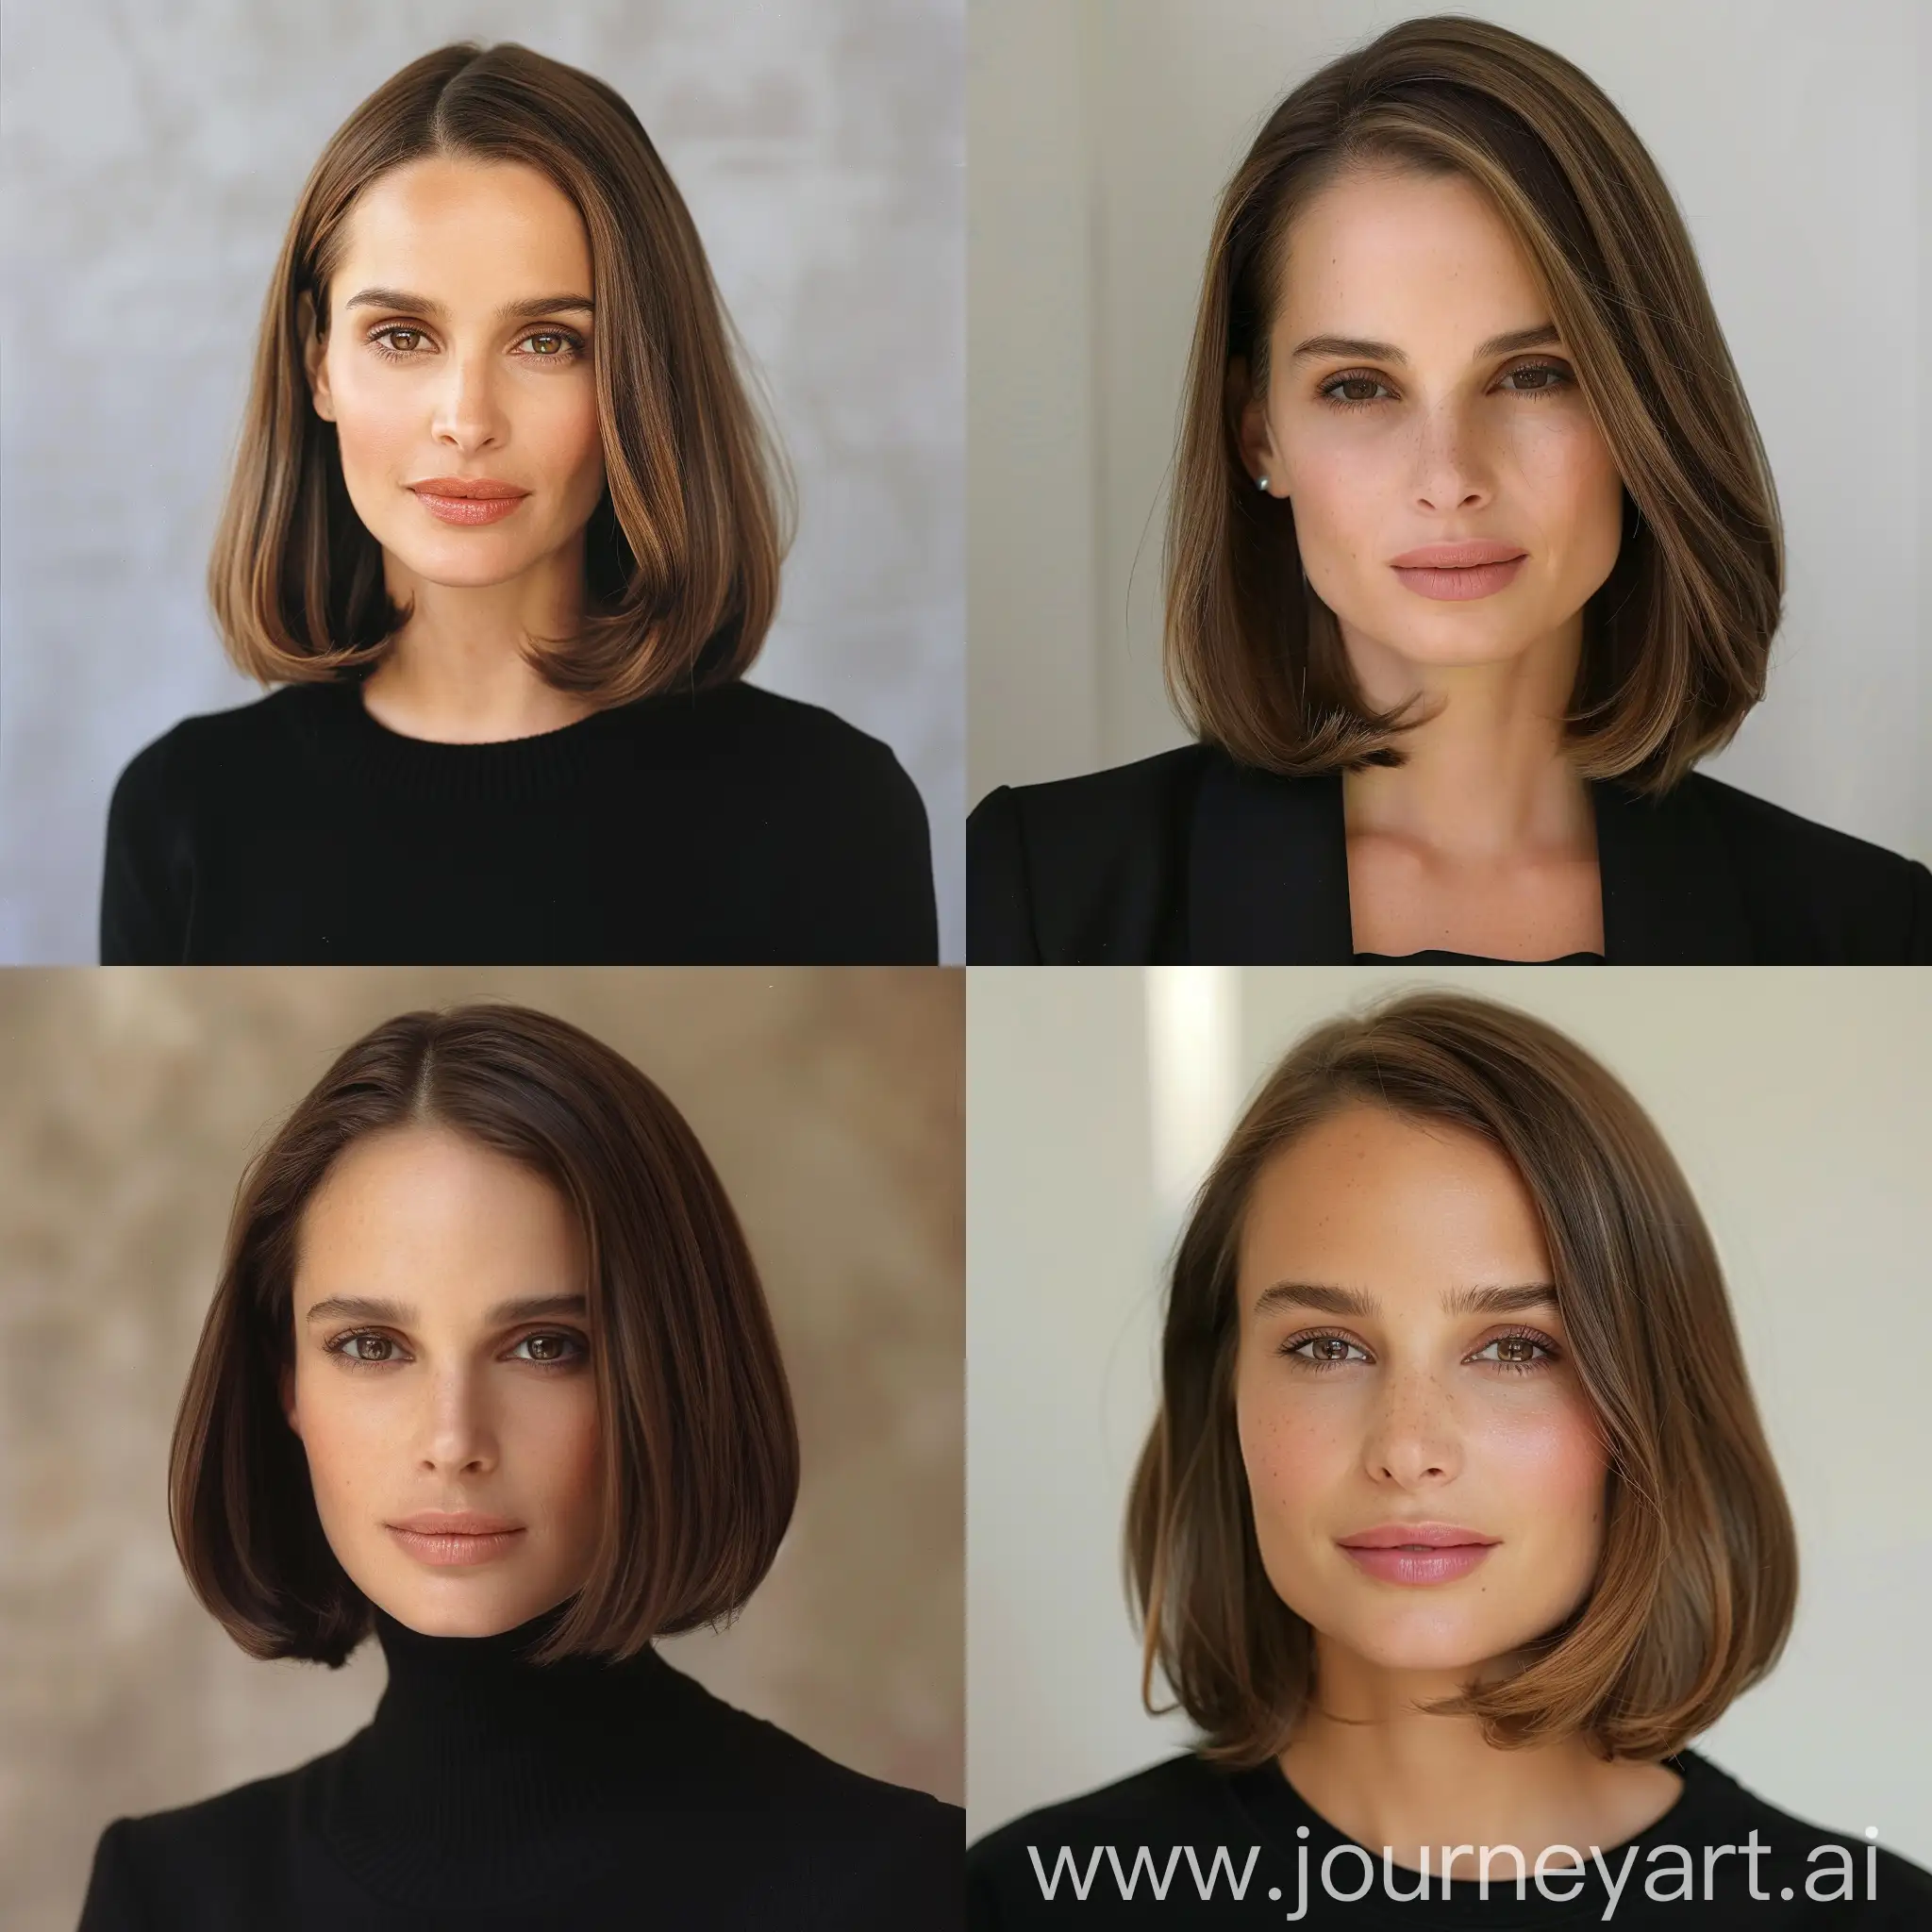 Natalie-Portman-with-Straight-Hair-CloseUp-Portrait